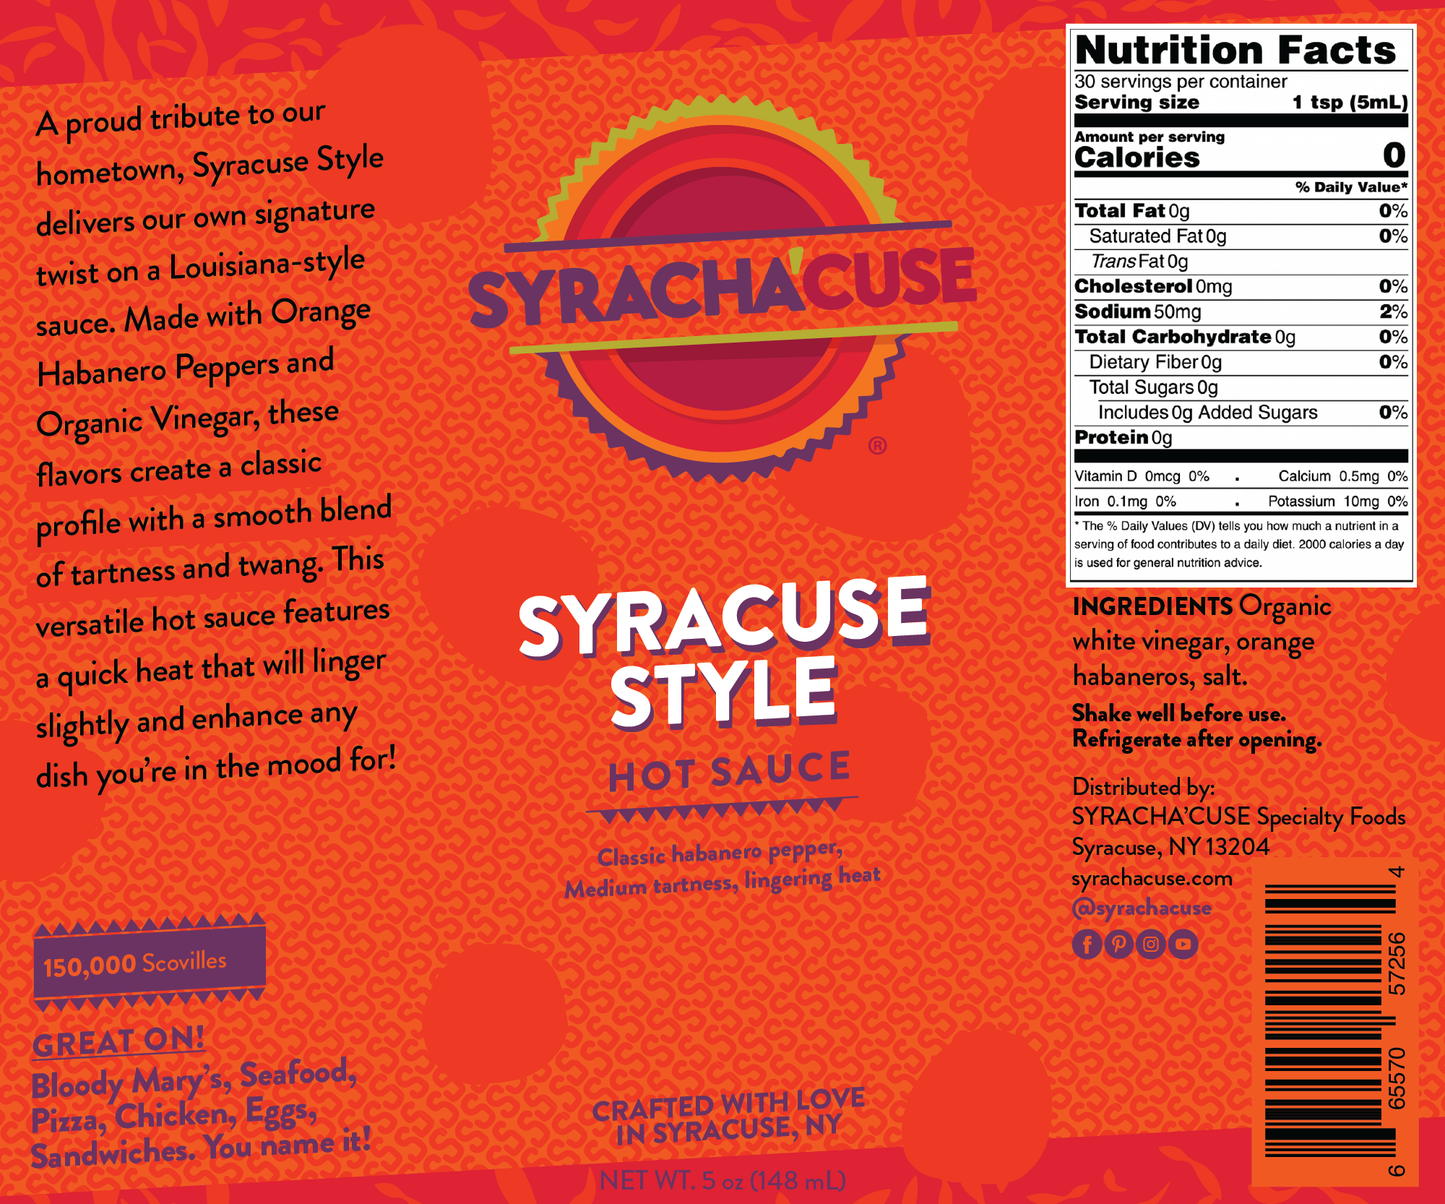 SYRACUSE STYLE HOT SAUCE, Syracuse's favorite hometown hot sauce.